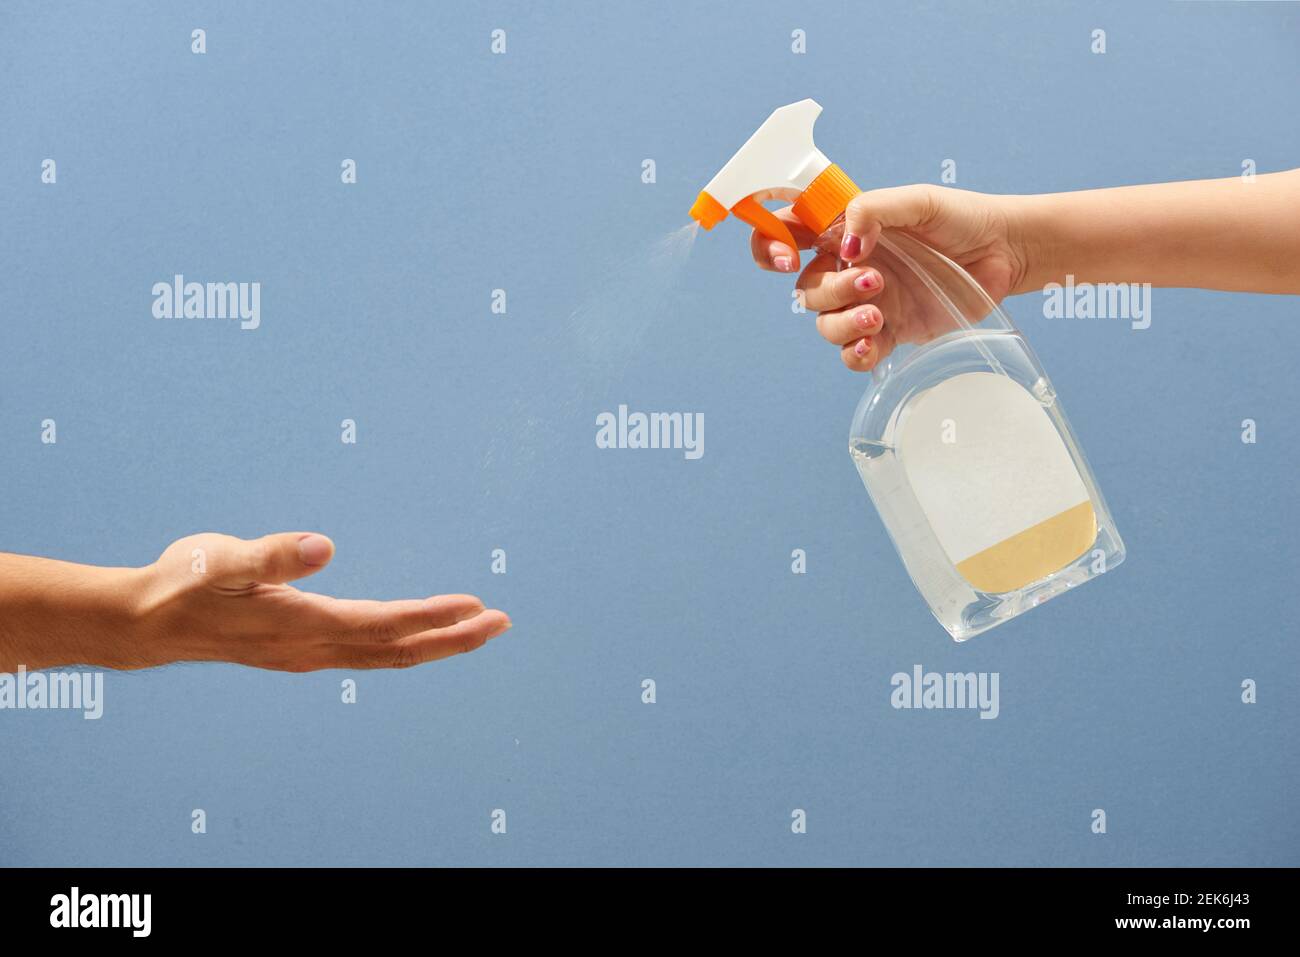 Spraying Antivirus Sanitizer Spray, Hand Sanitizer Dispenser, infection control concept. Stock Photo